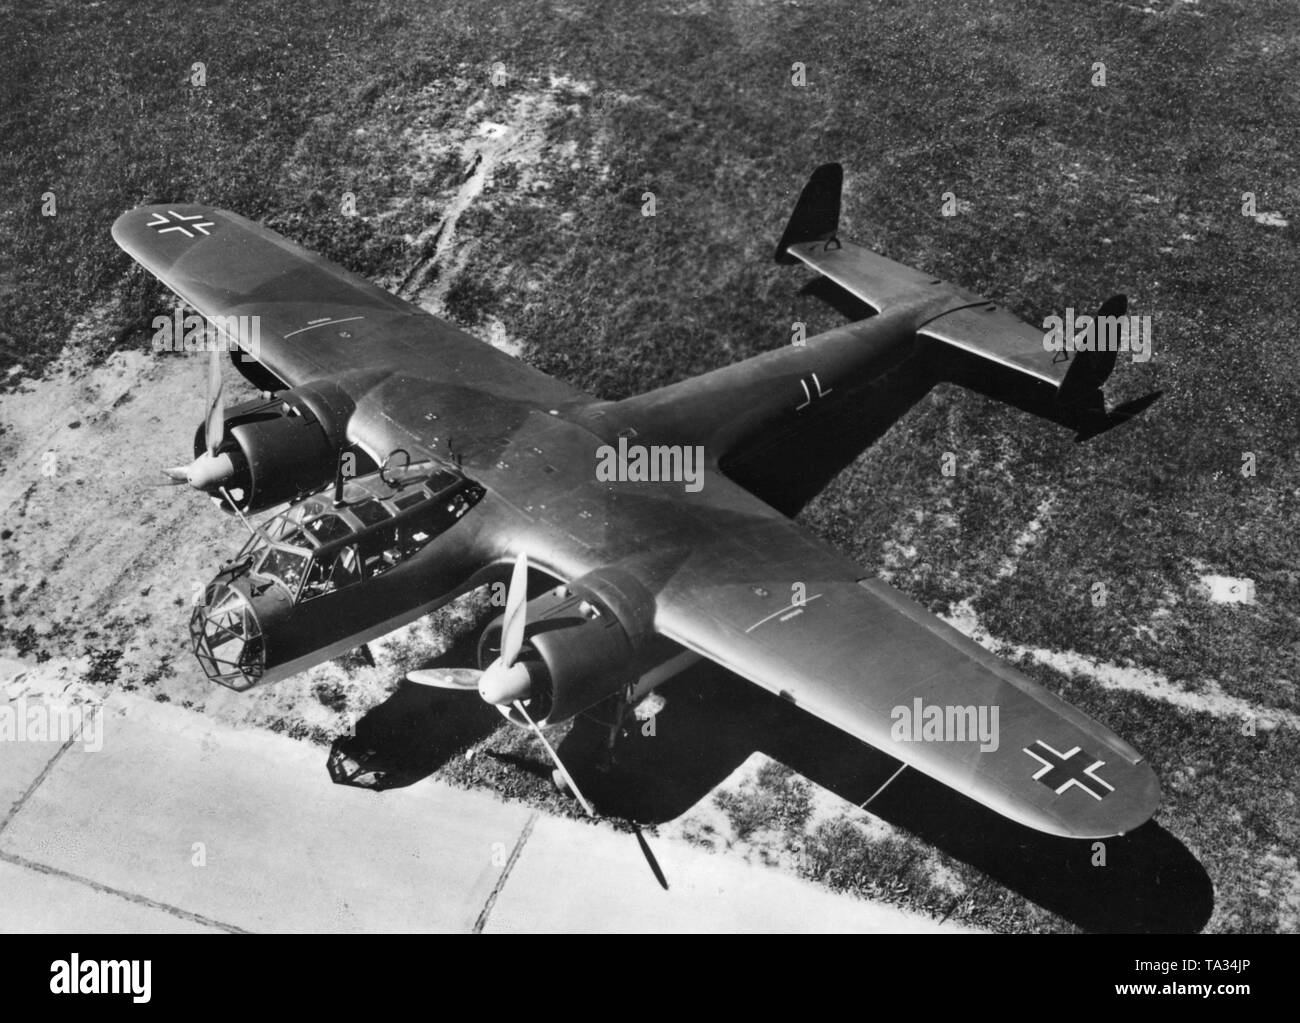 Dornier Do 17 combat aircraft, a medium bomber of the German Luftwaffe. Stock Photo